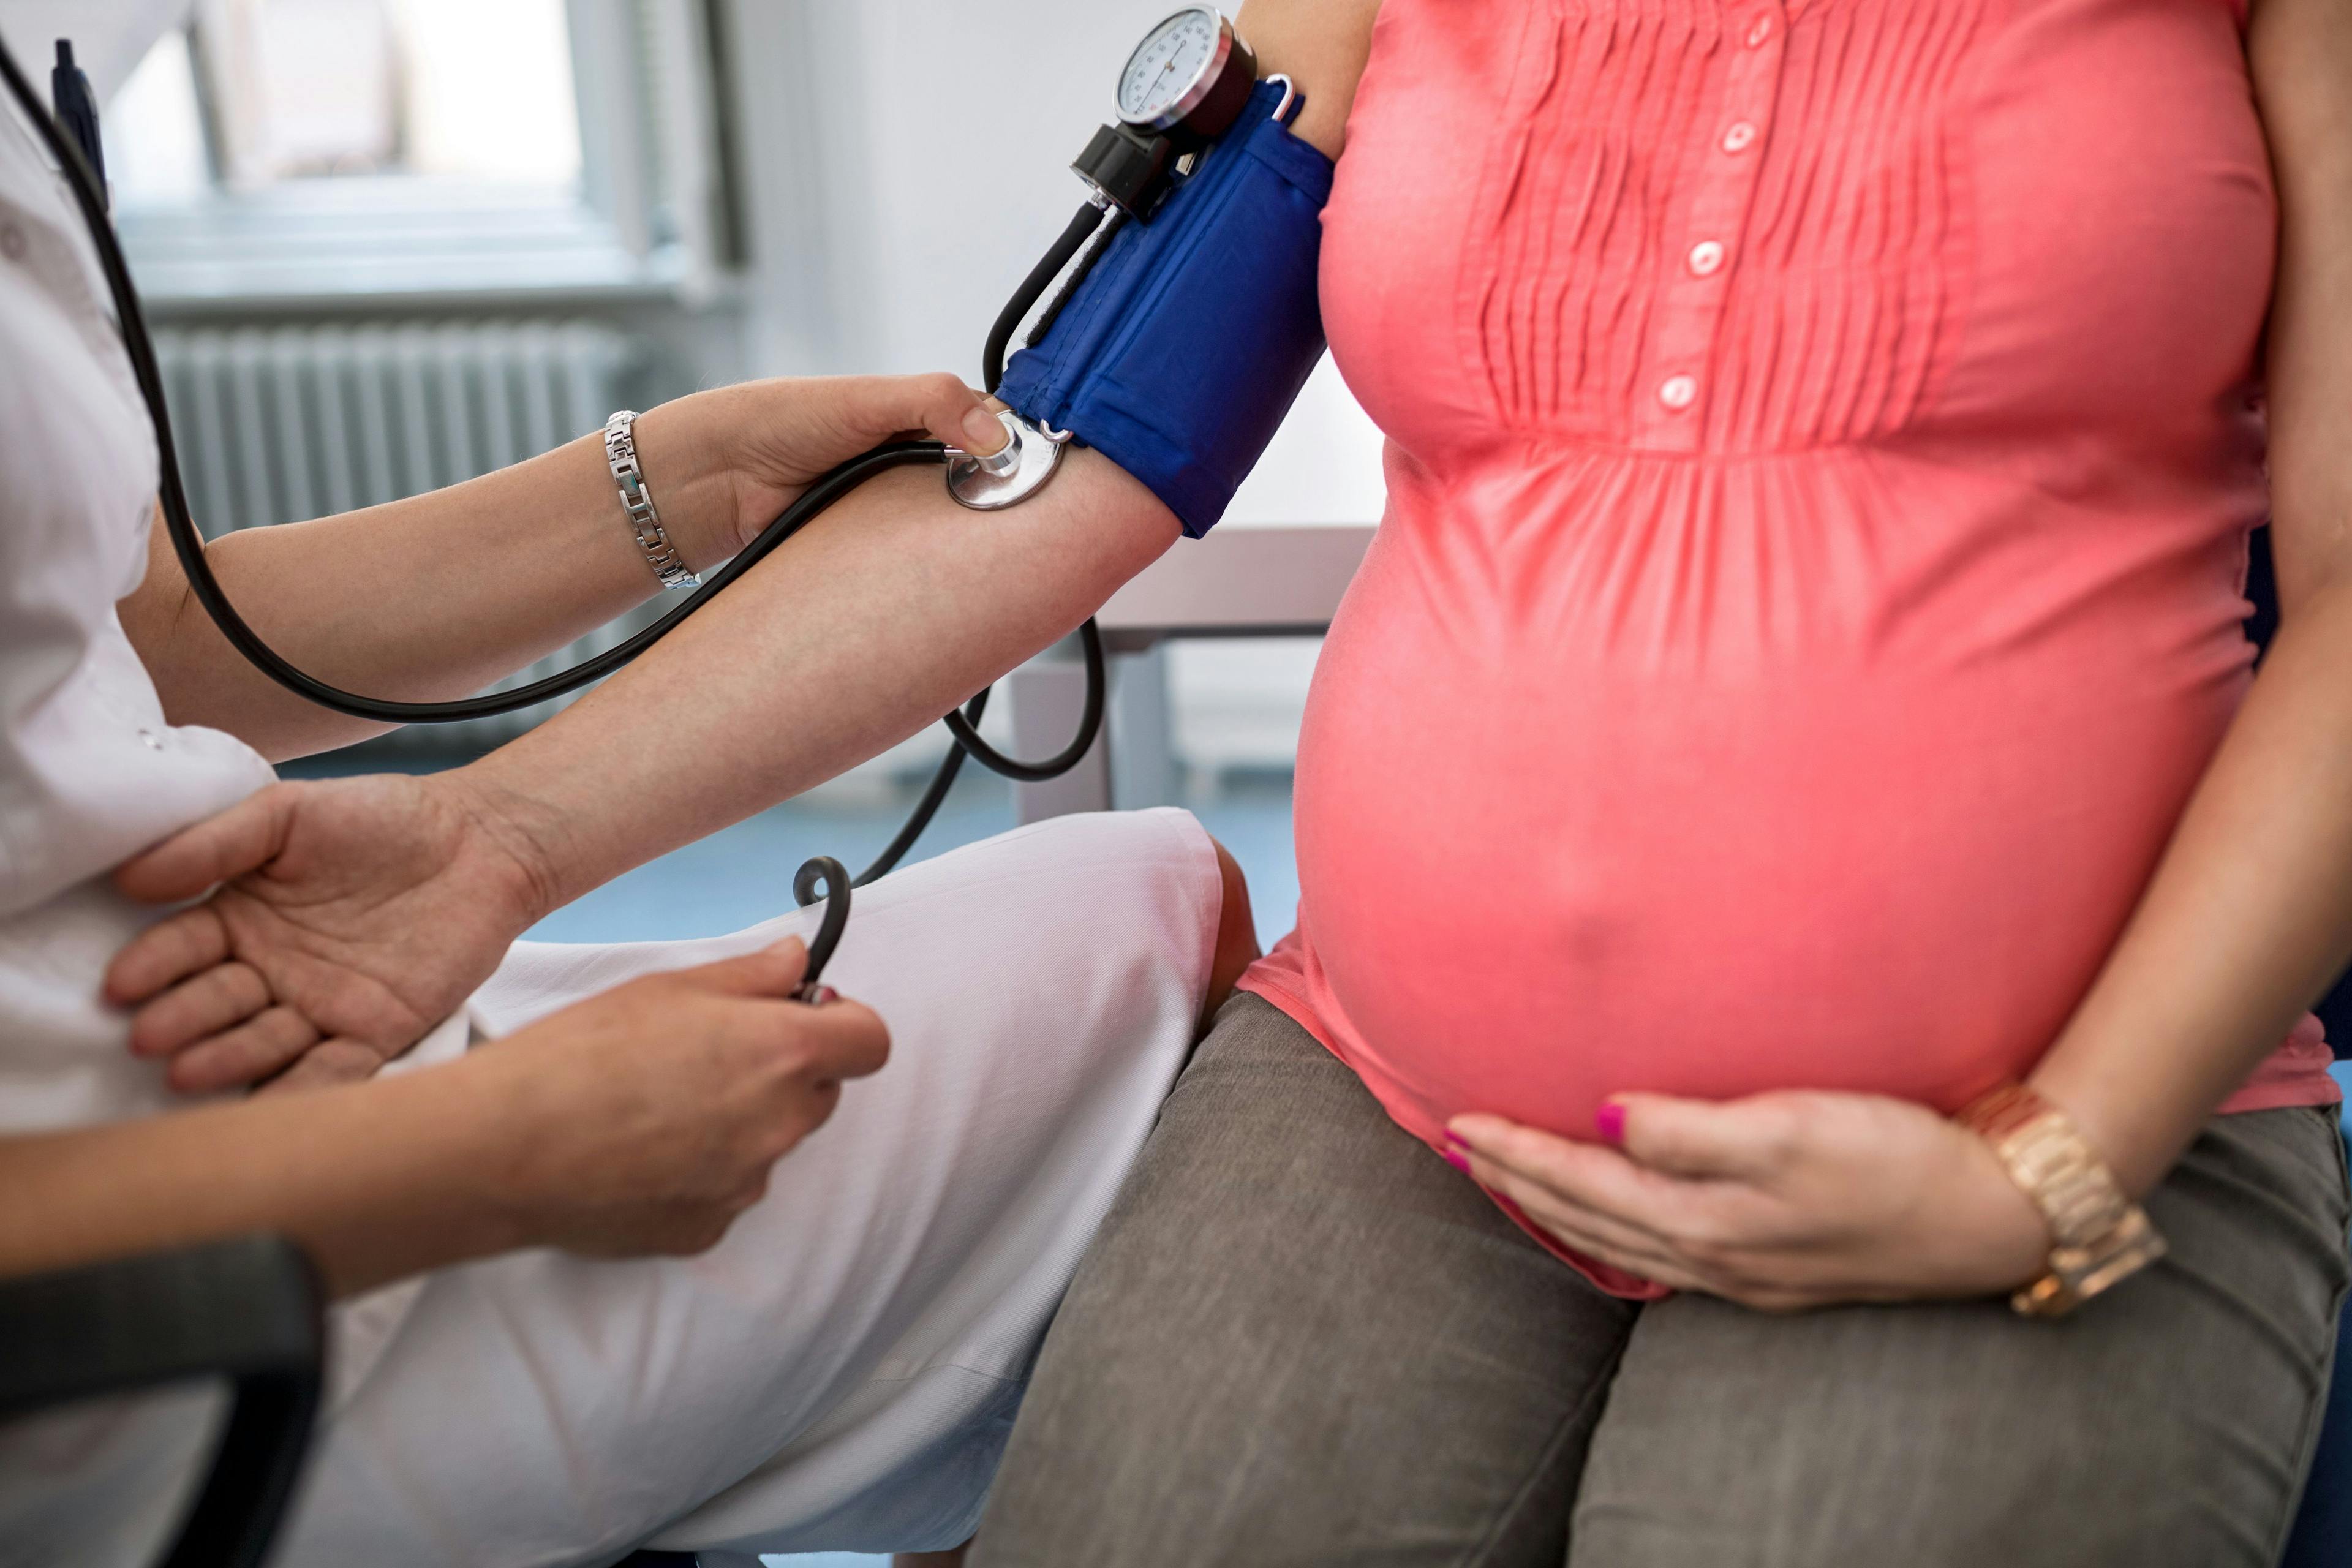 Trends in chronic hypertension in pregnancy